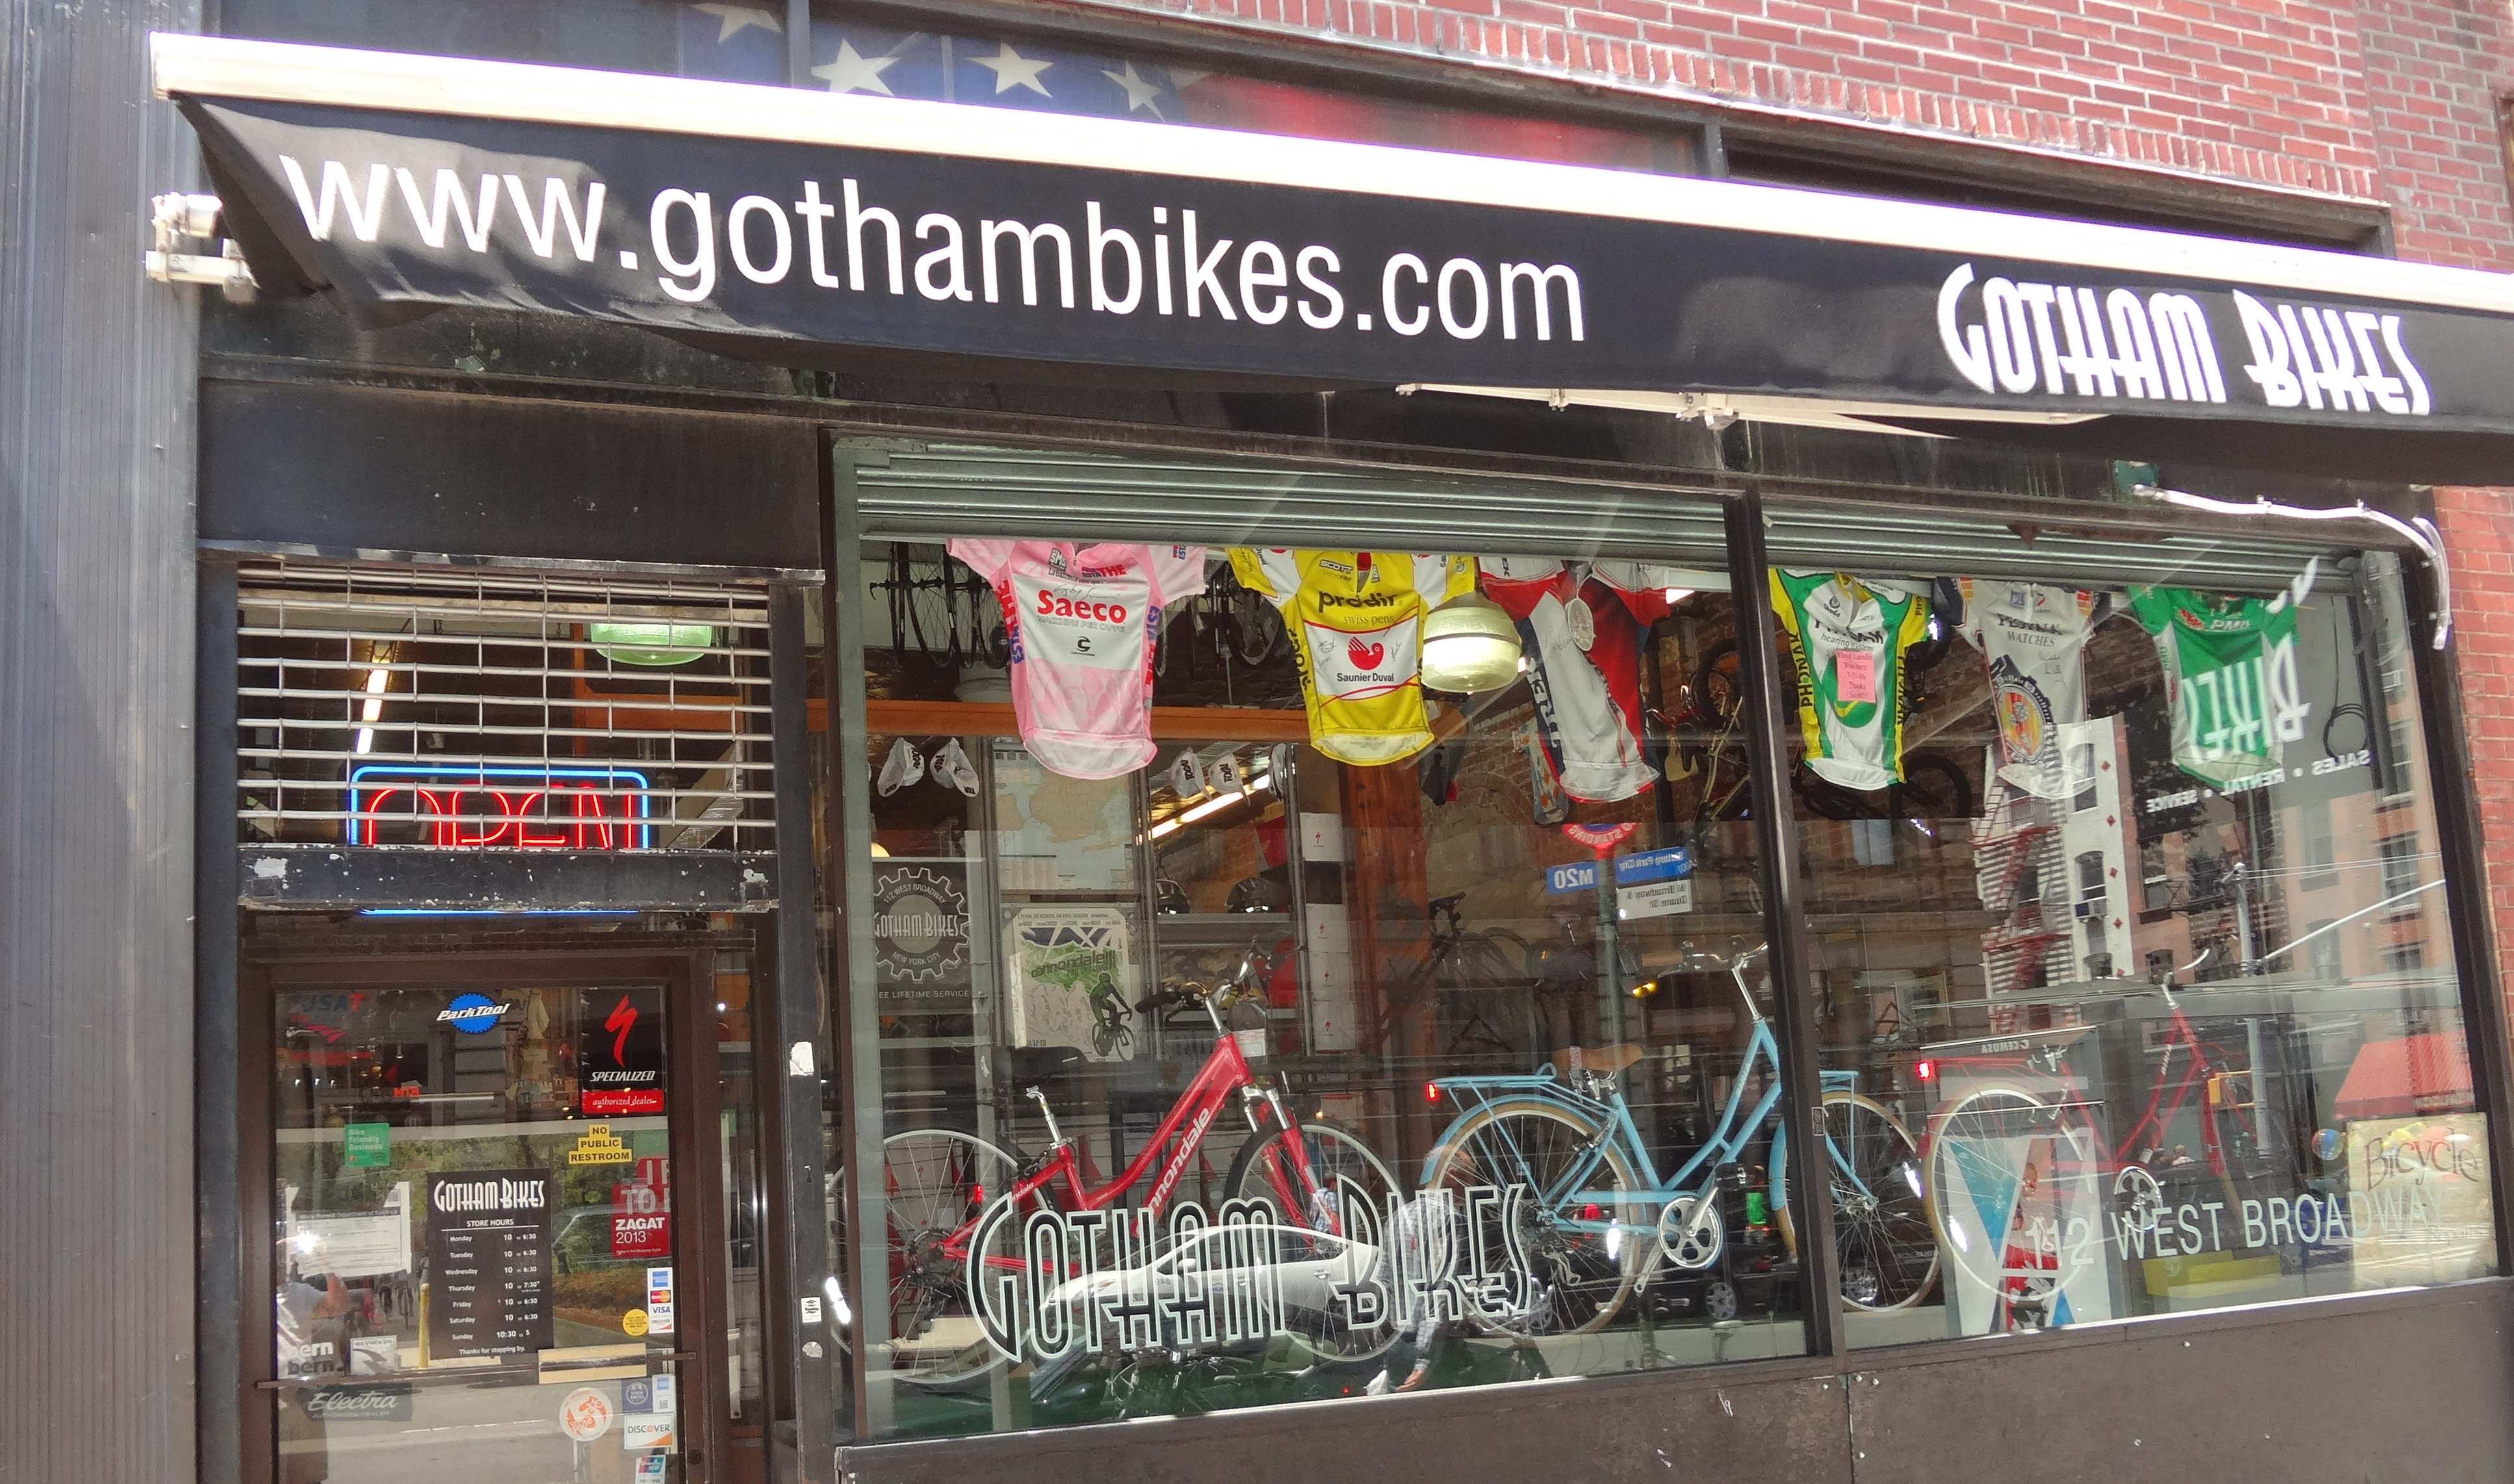 Gotham bikes front